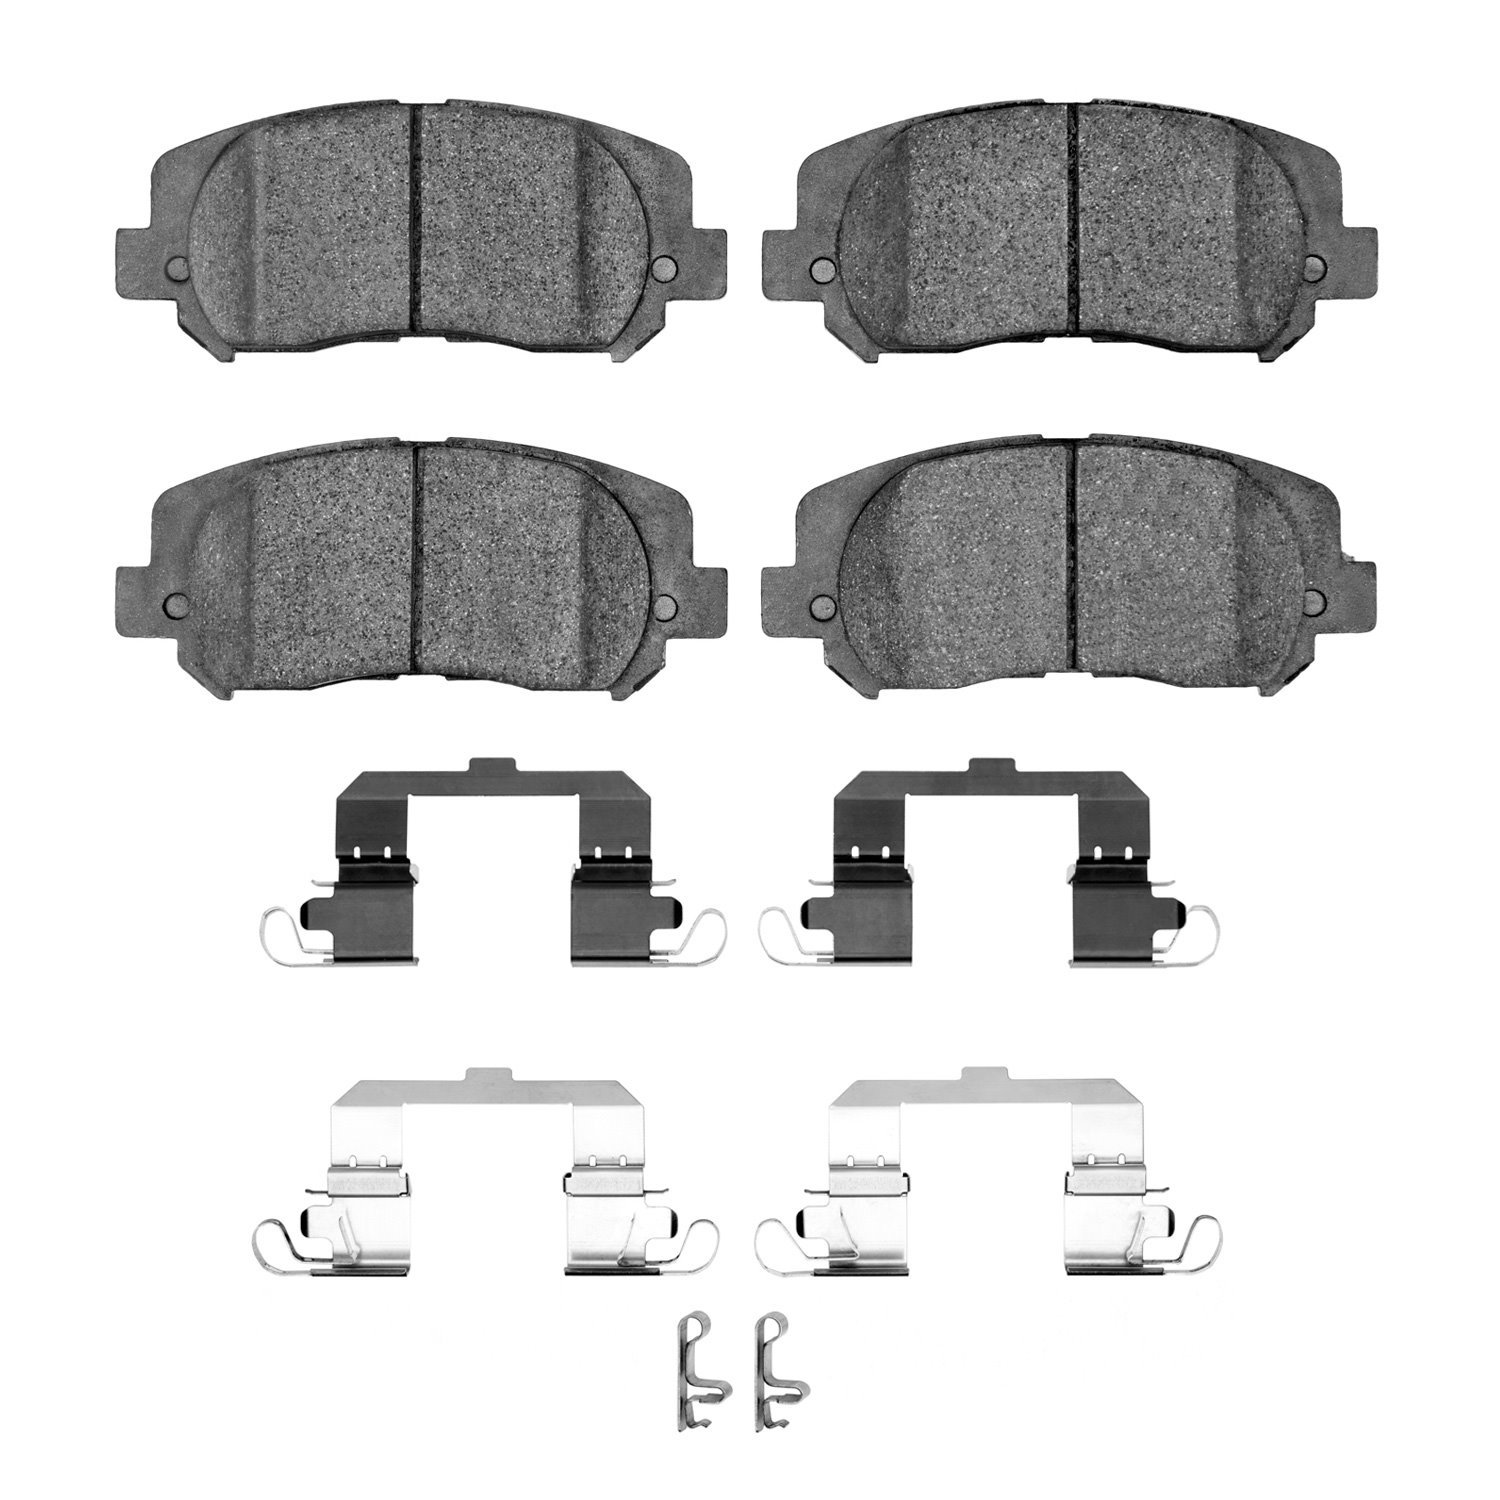 1310-1640-12 3000-Series Ceramic Brake Pads & Hardware Kit, Fits Select Mopar, Position: Front